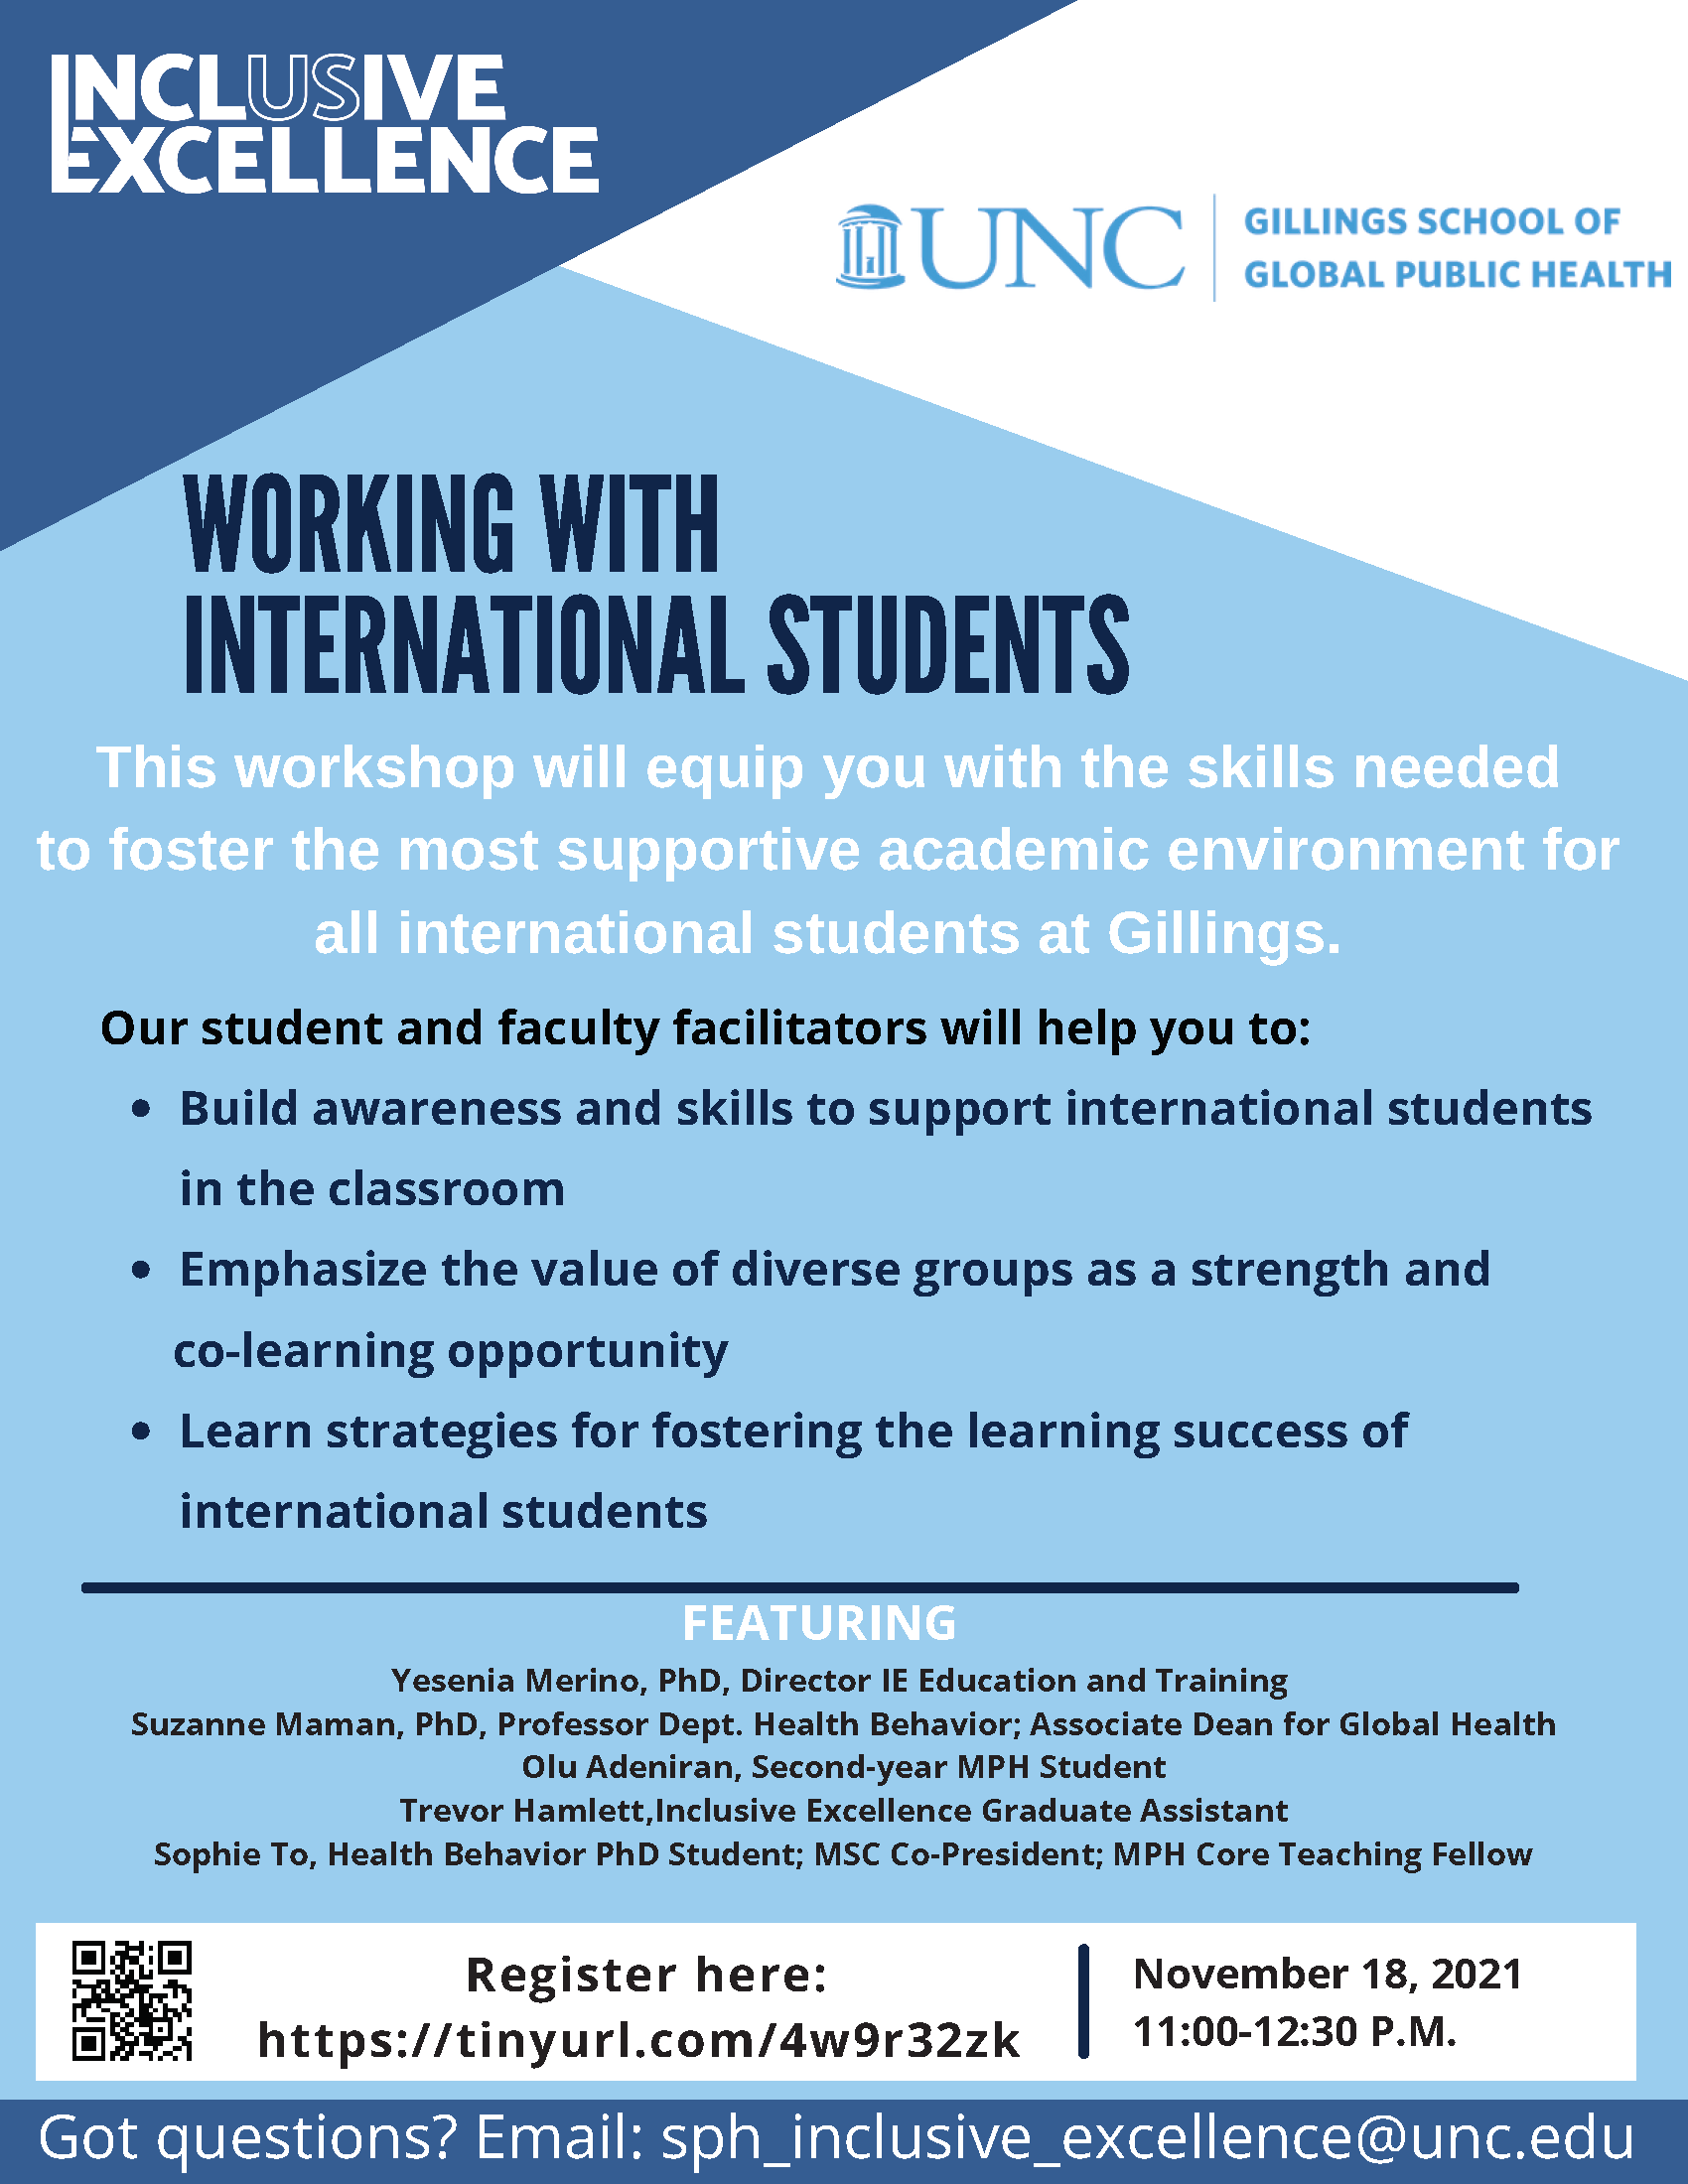 The Third Annual International Graduate Student Workshop